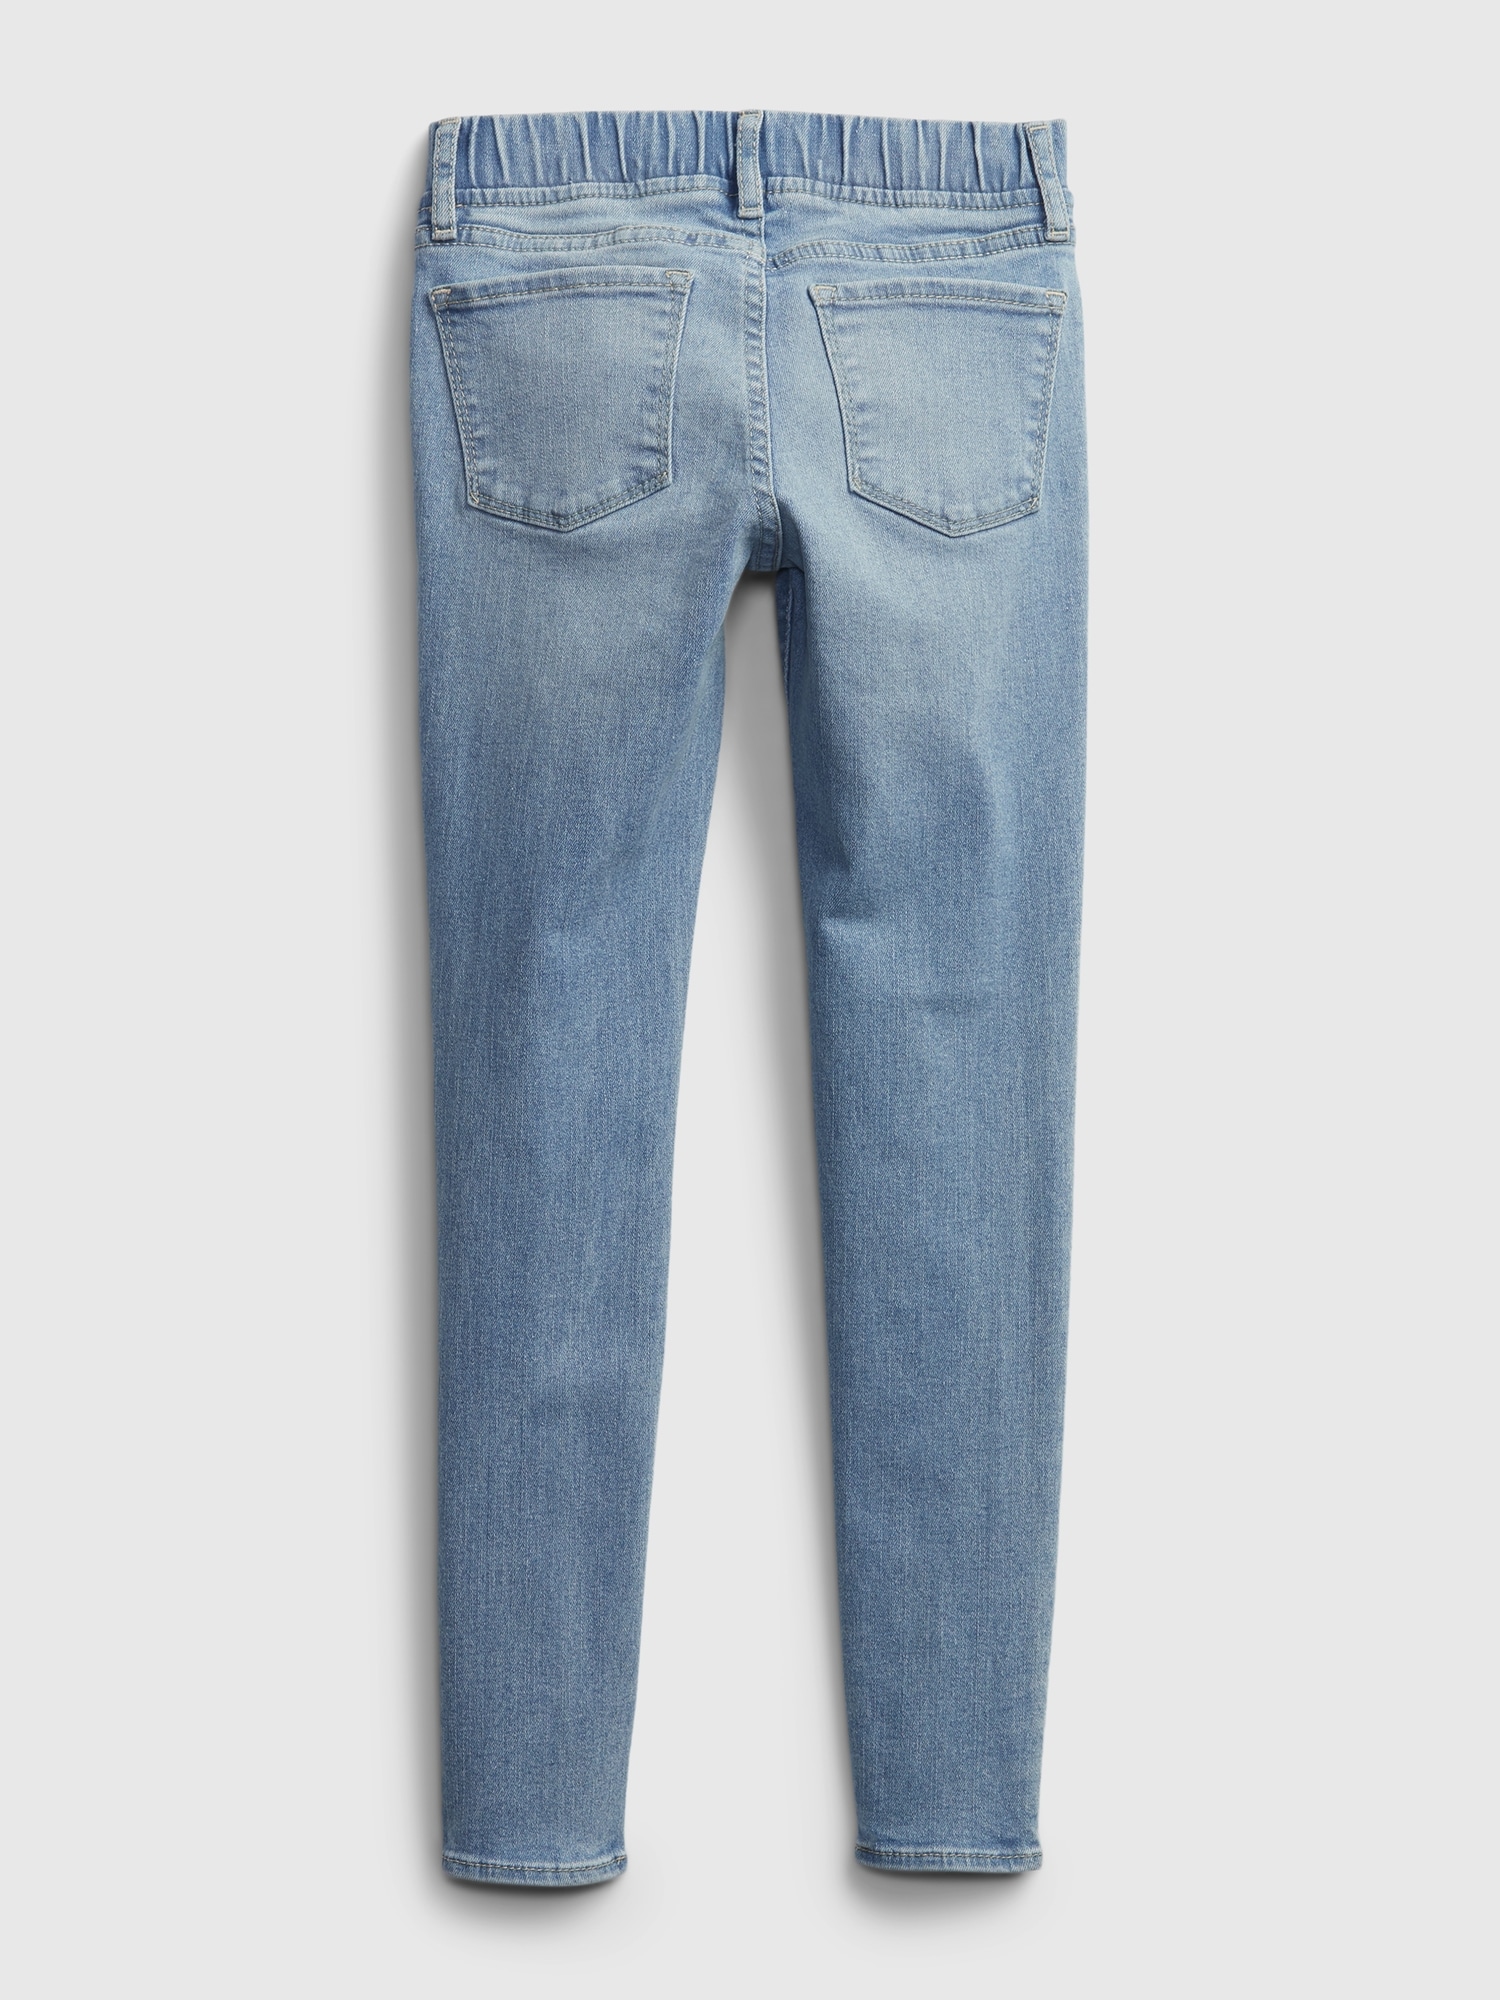 Gap brand Girls Jeans Jeggings sz 8 Two pair